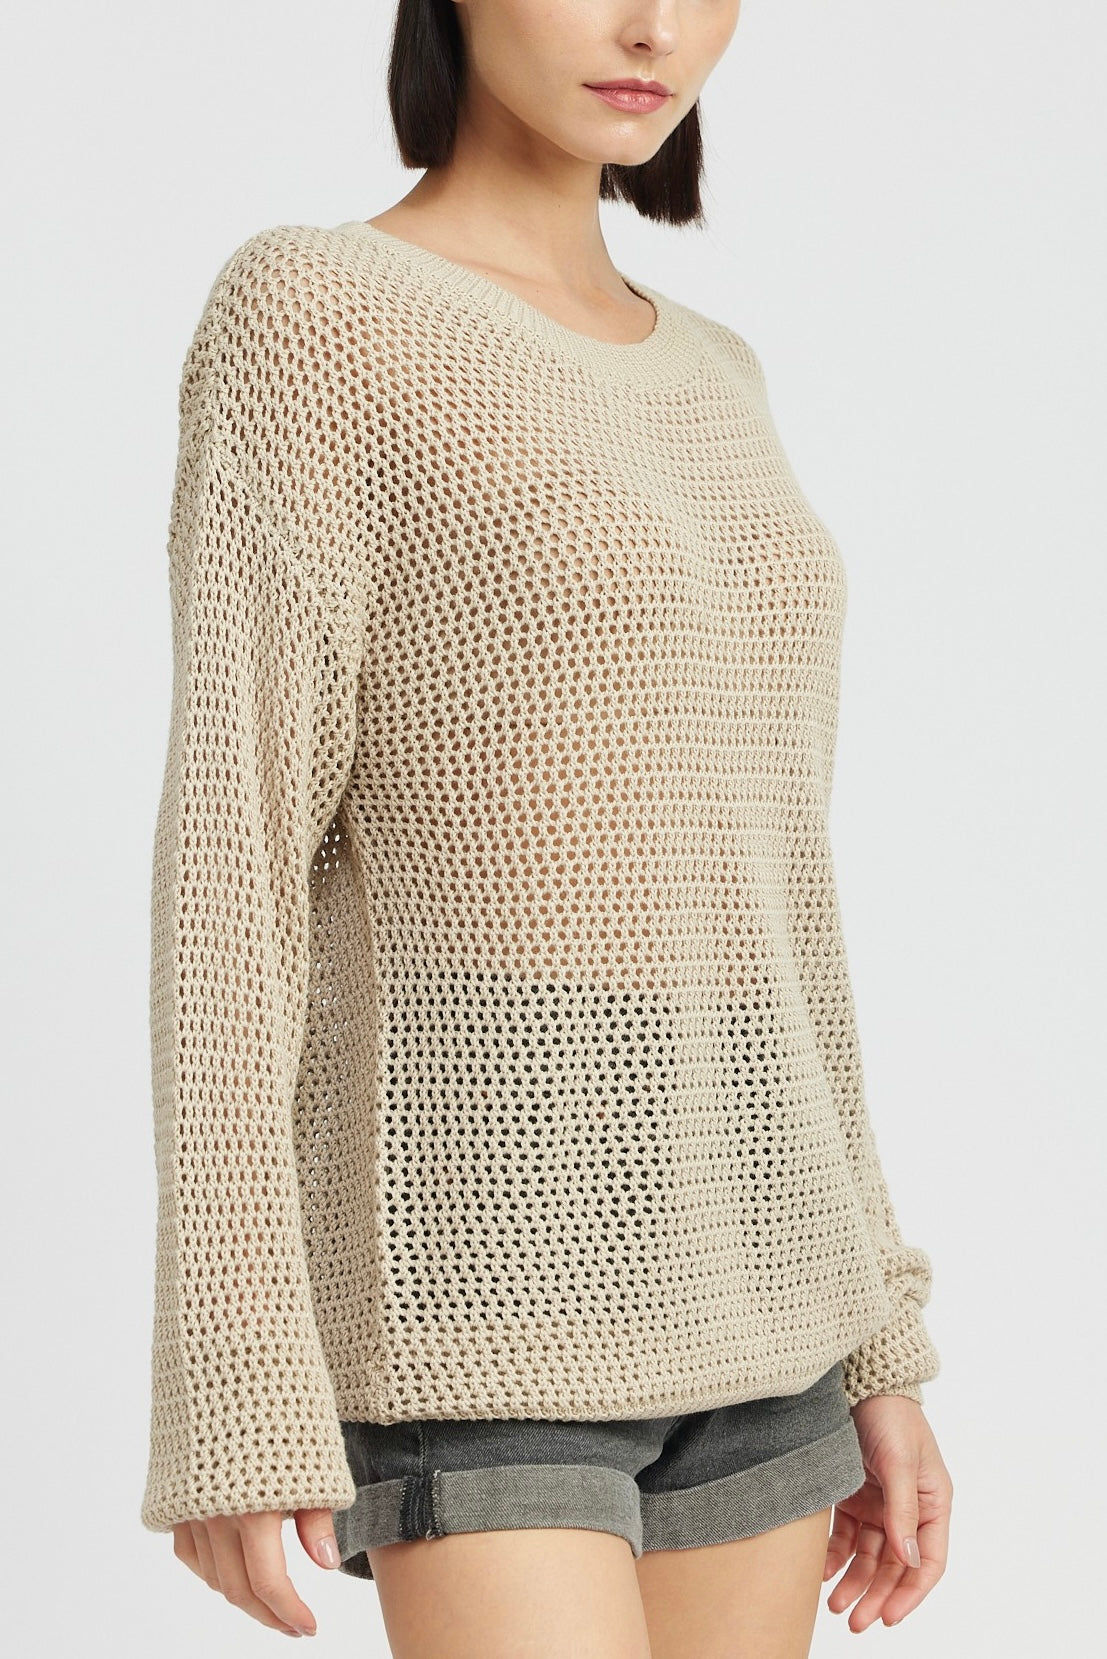 Cora Crochet Long Sleeve Top